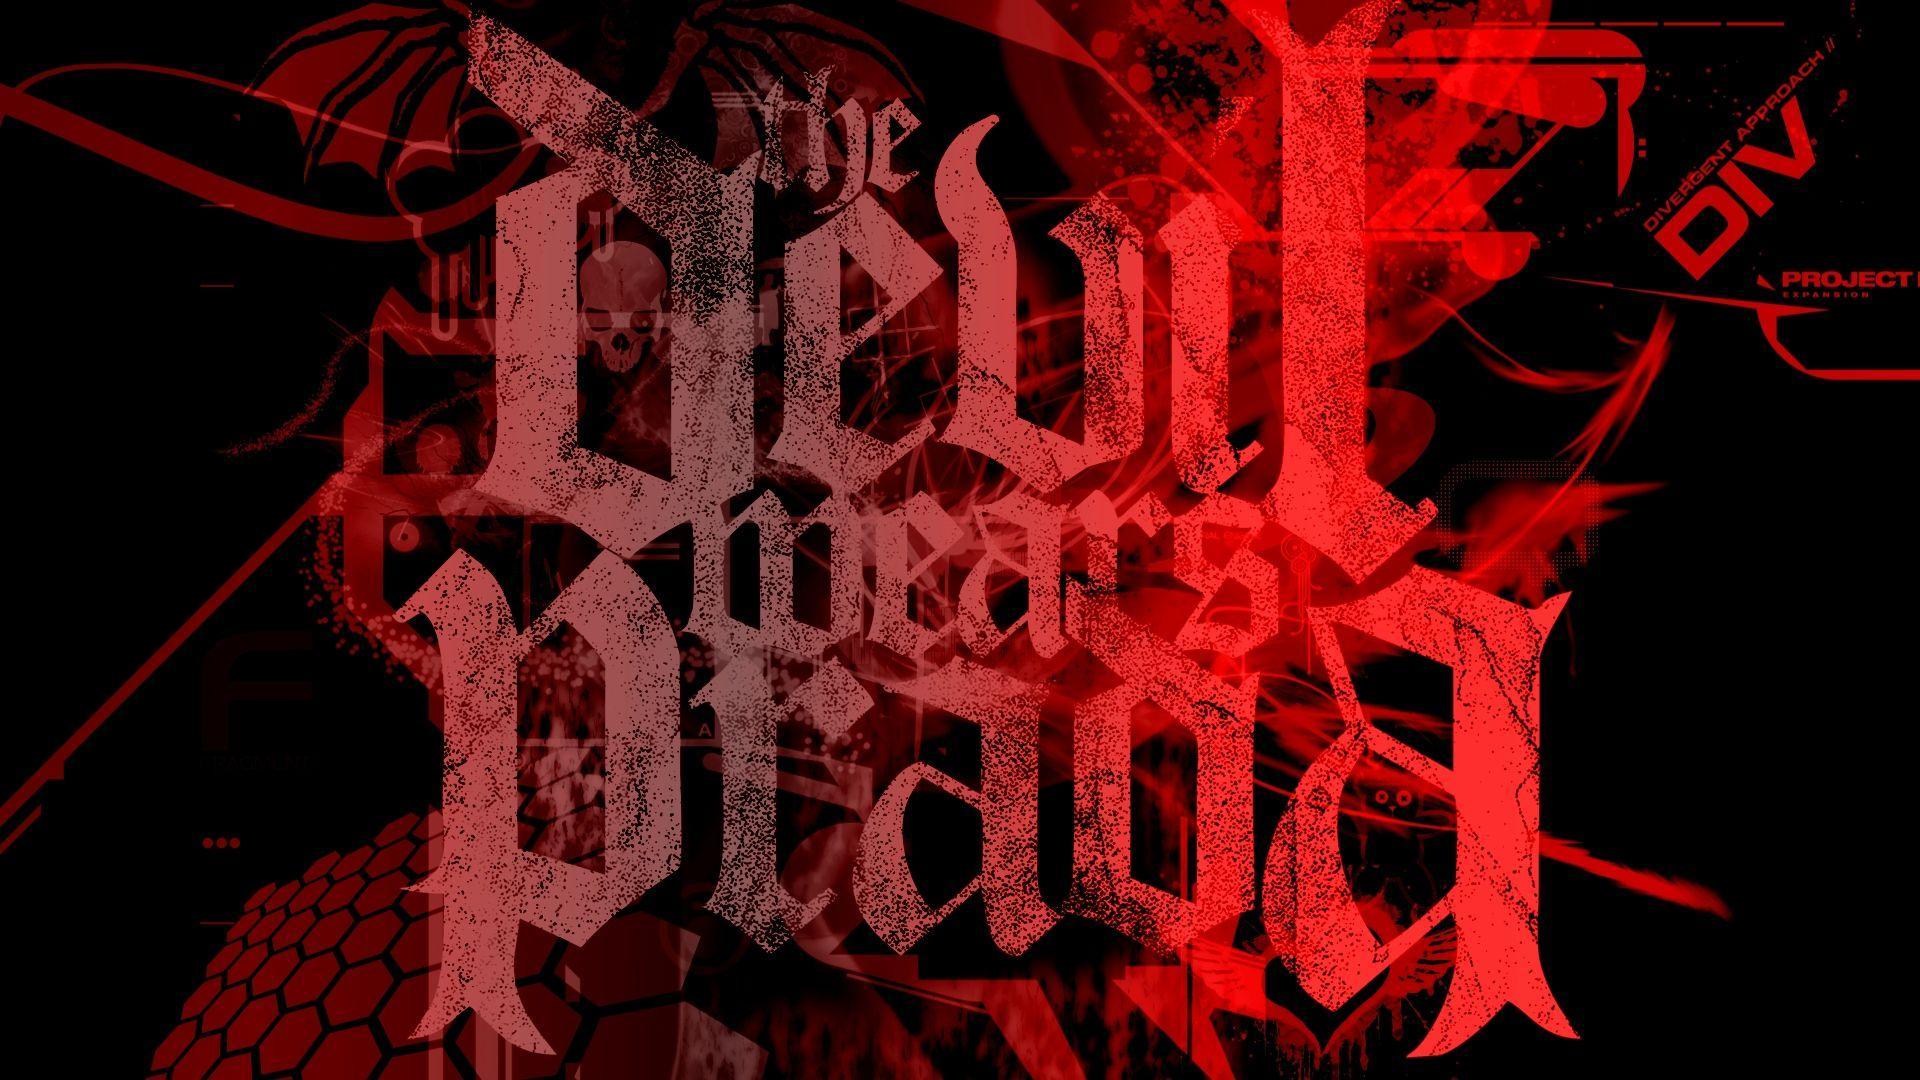 Devil Wears Prada Band Wallpaper Image Gallery